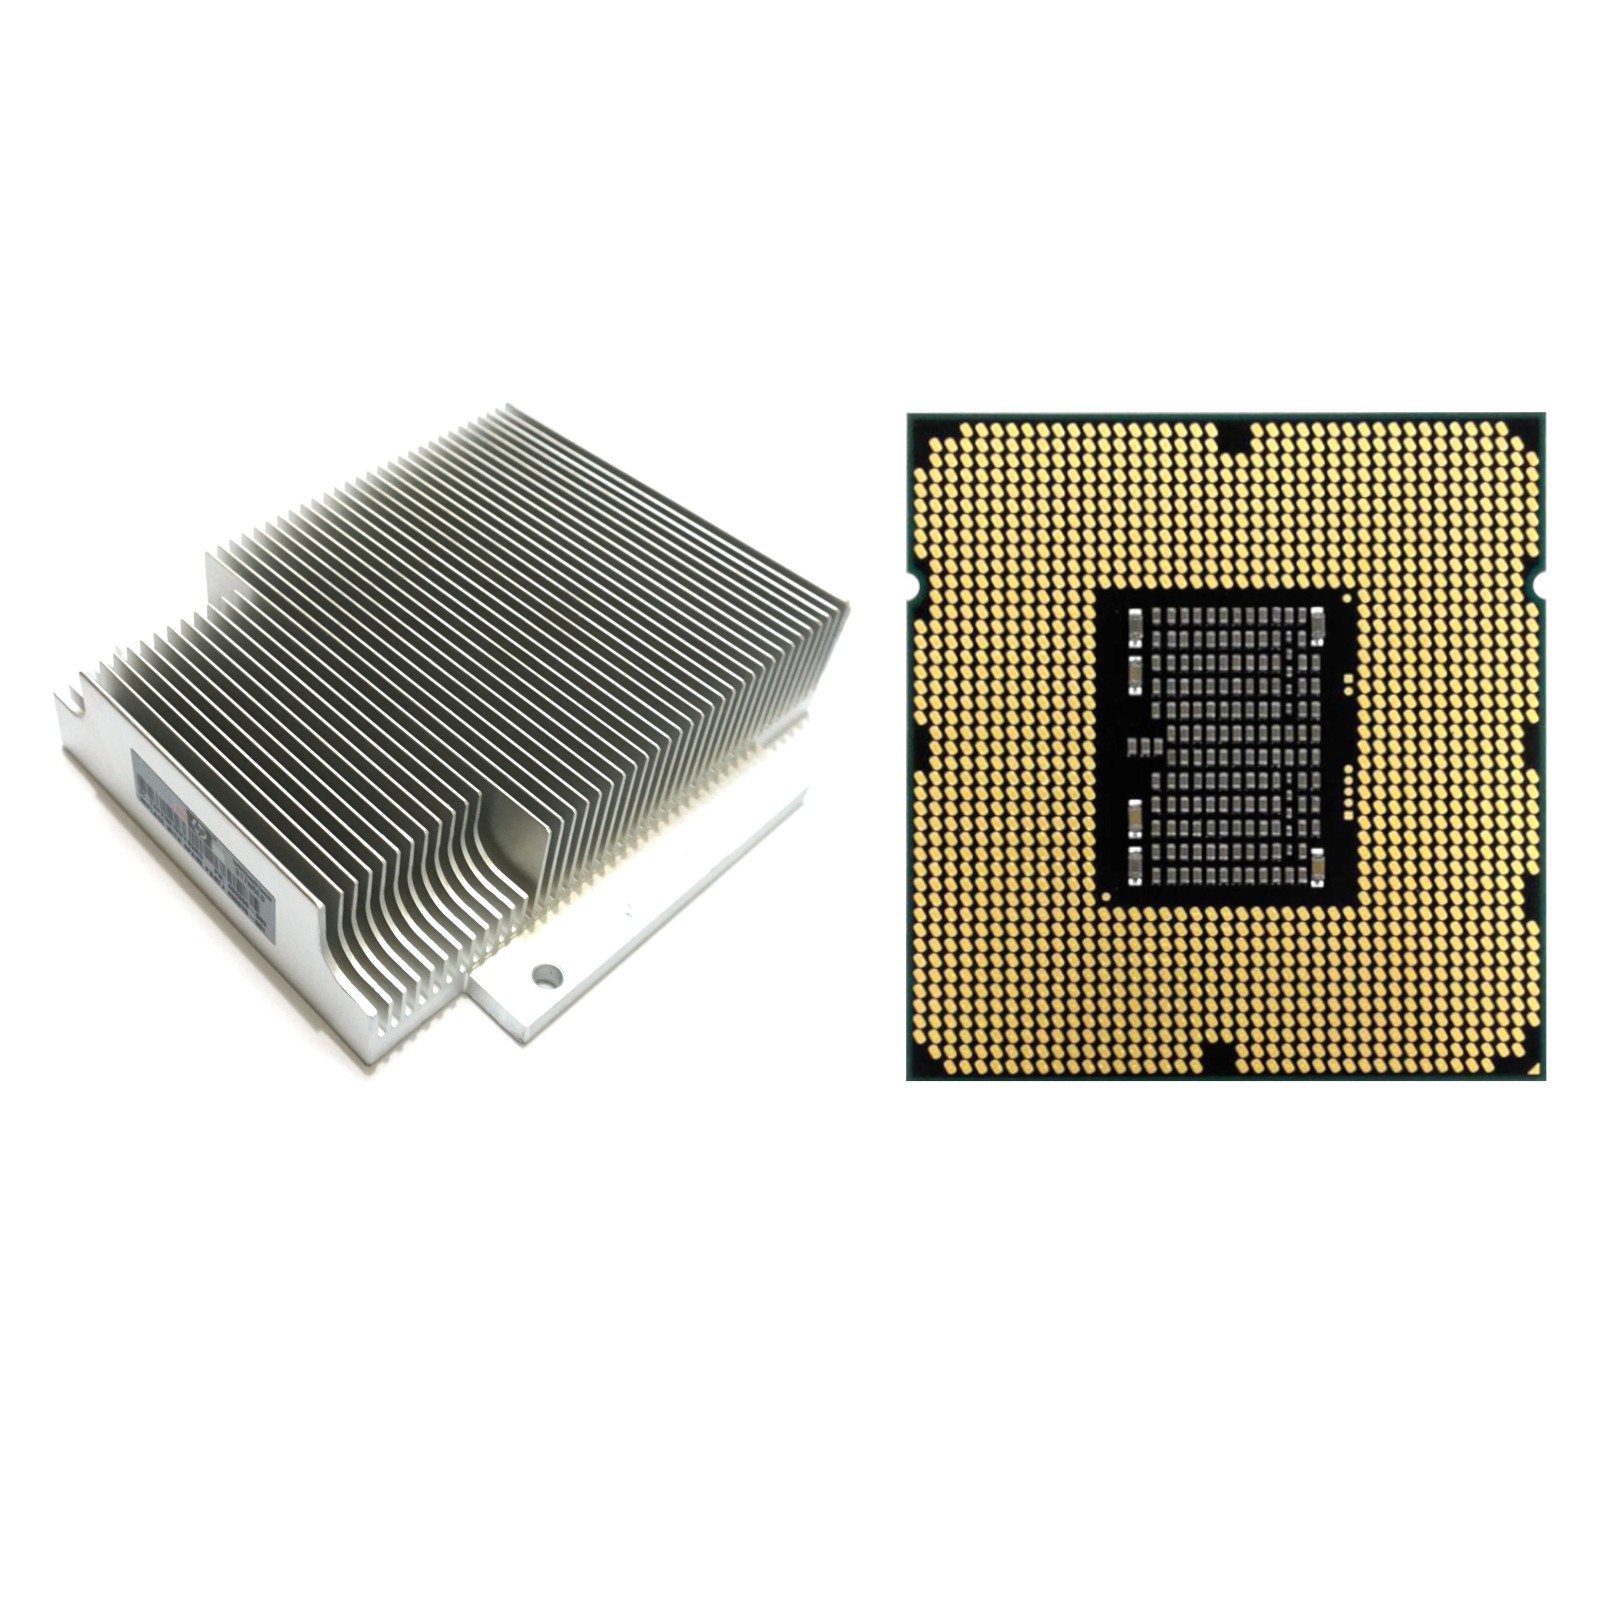 HP (588076-L21) ProLiant DL360 G6/DL360 G7 - Intel Xeon E5503 CPU1 Kit